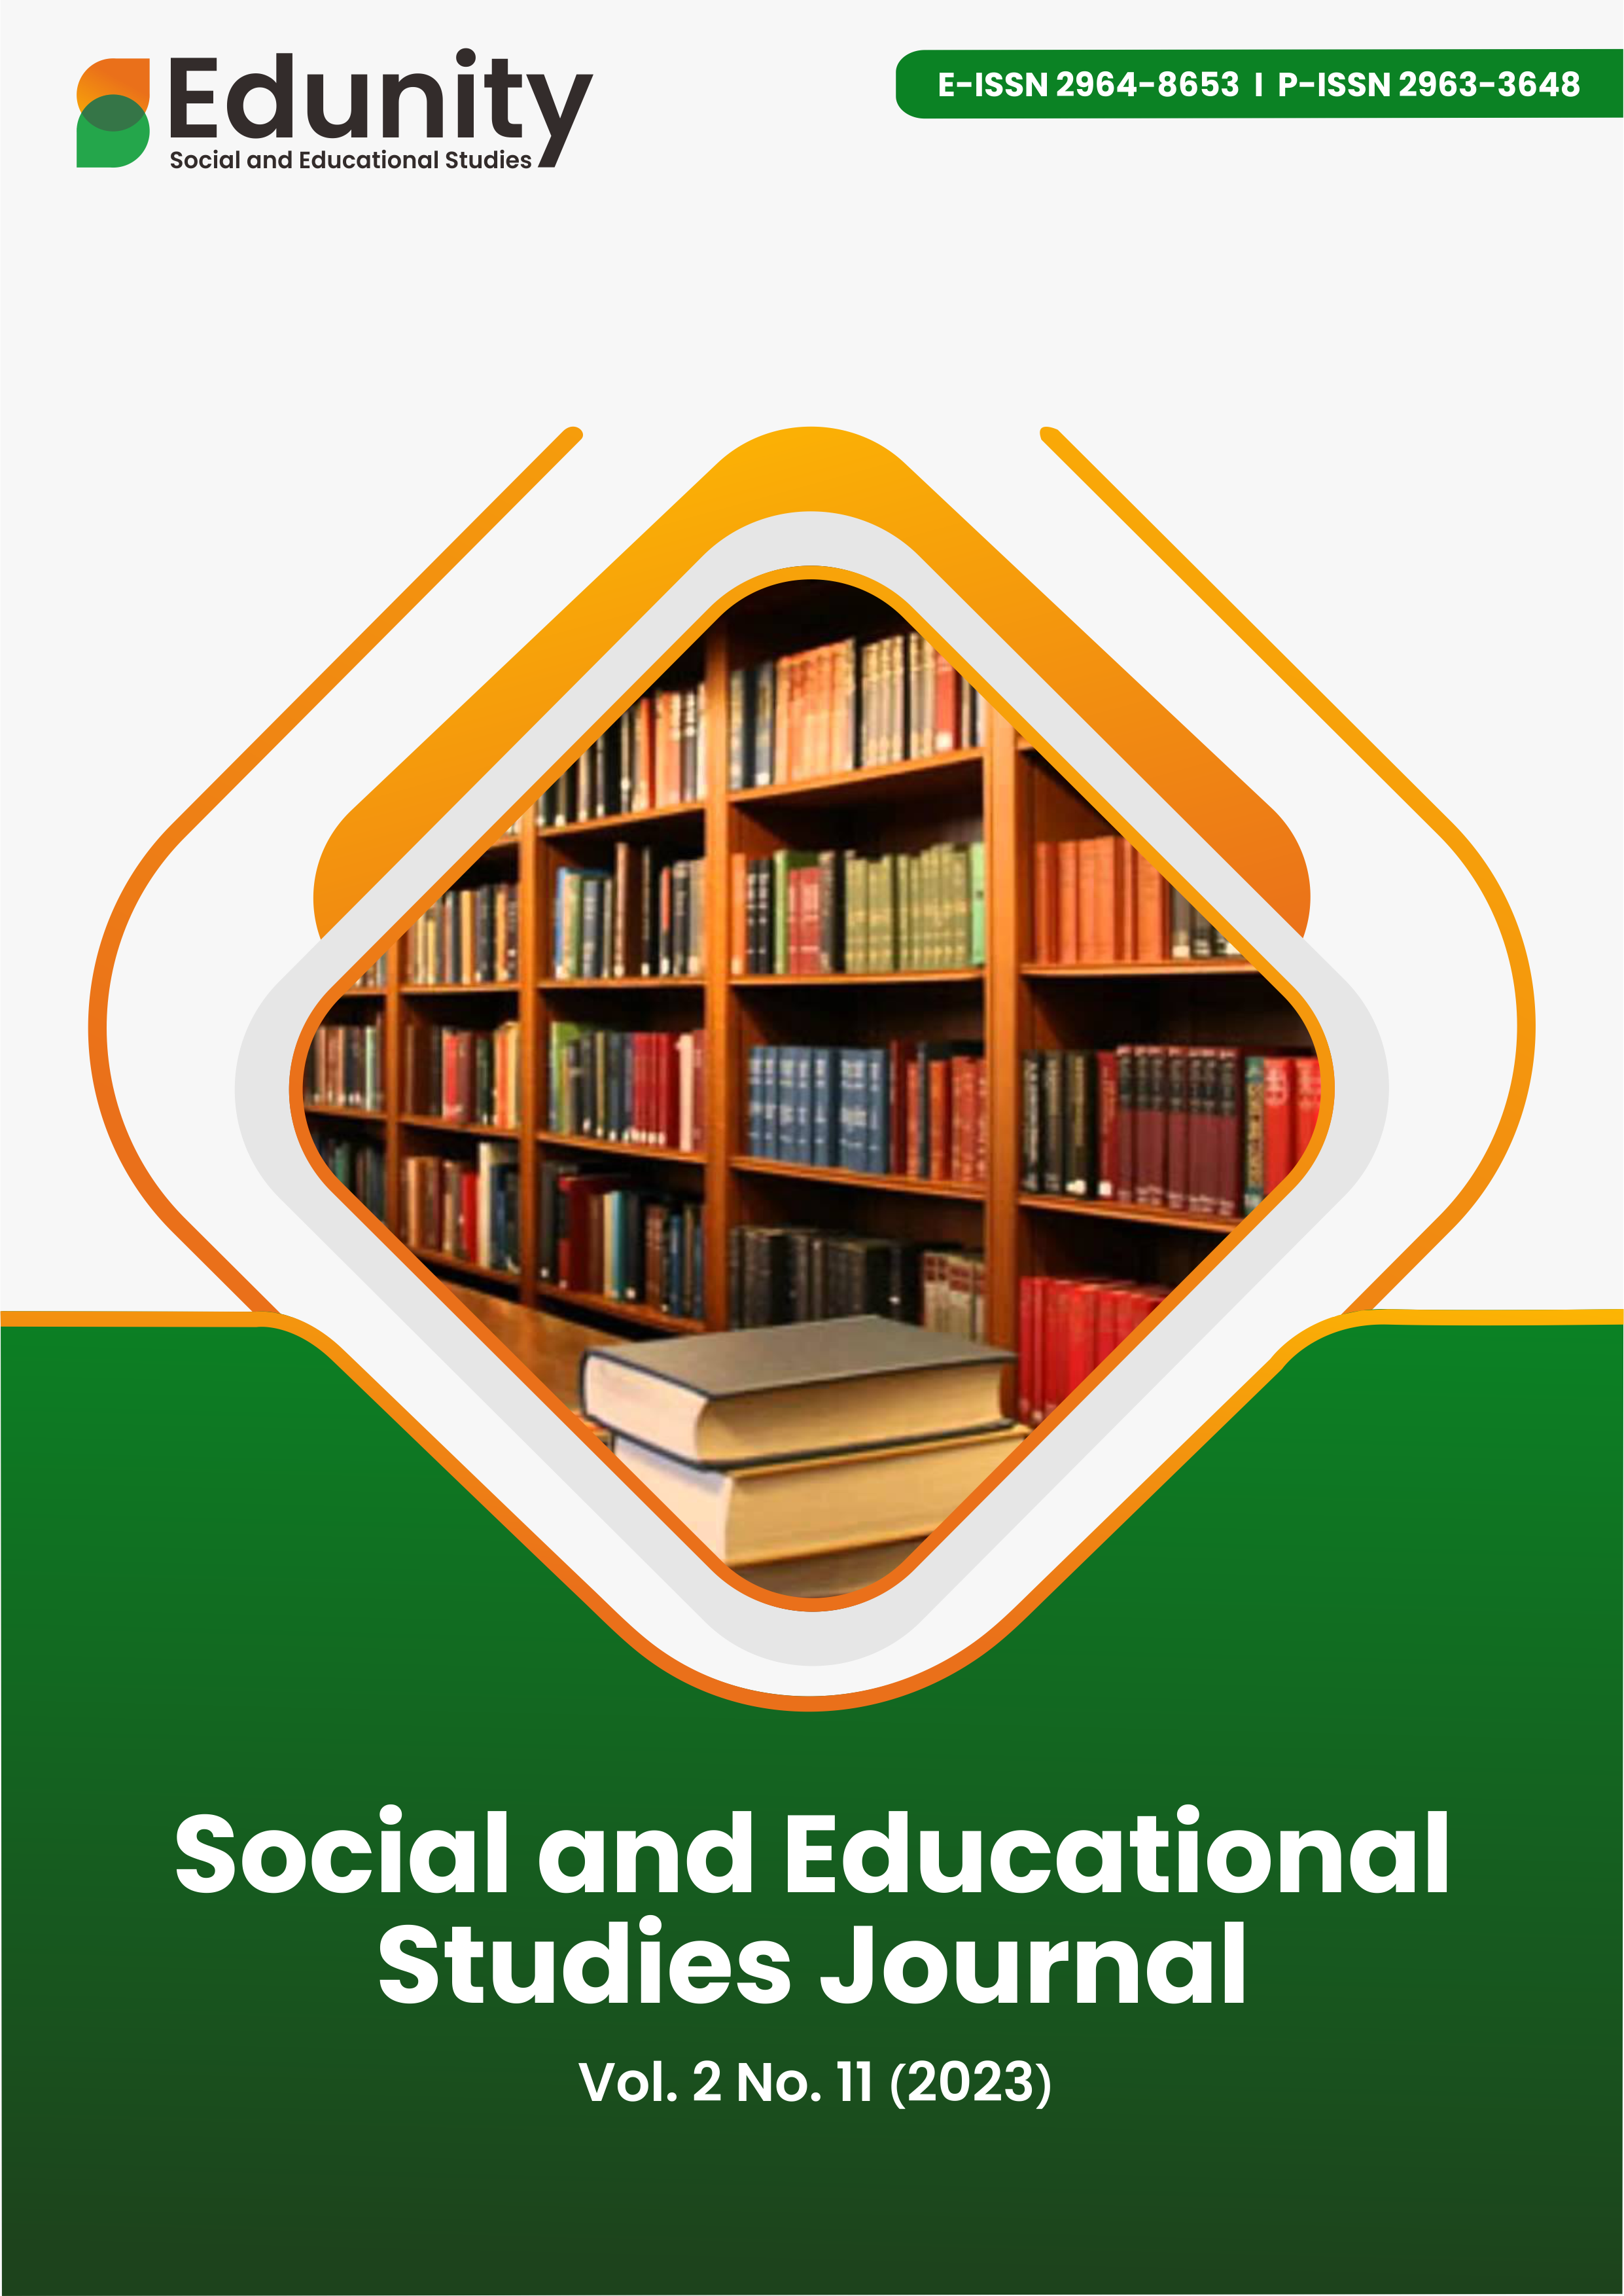 					View Vol. 2 No. 11 (2023): Edunity : Social and Educational Studies
				